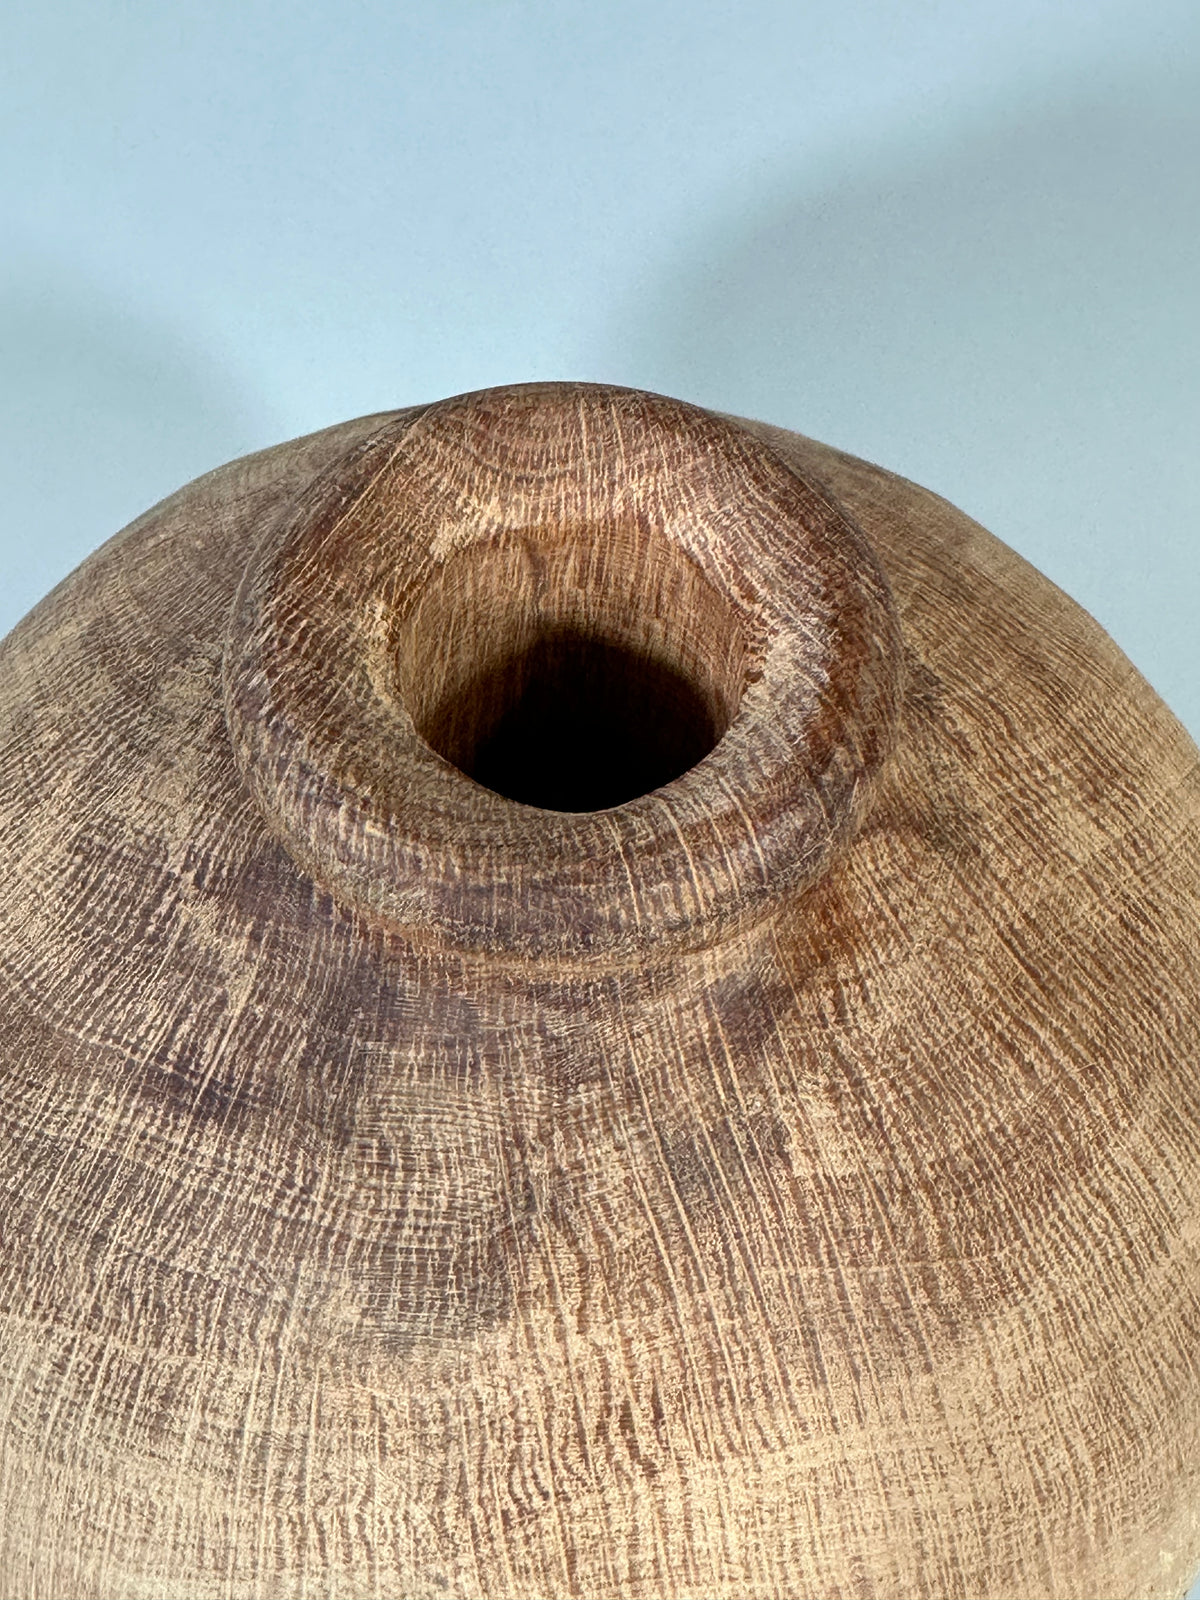 Wood Vase - Cultheir 